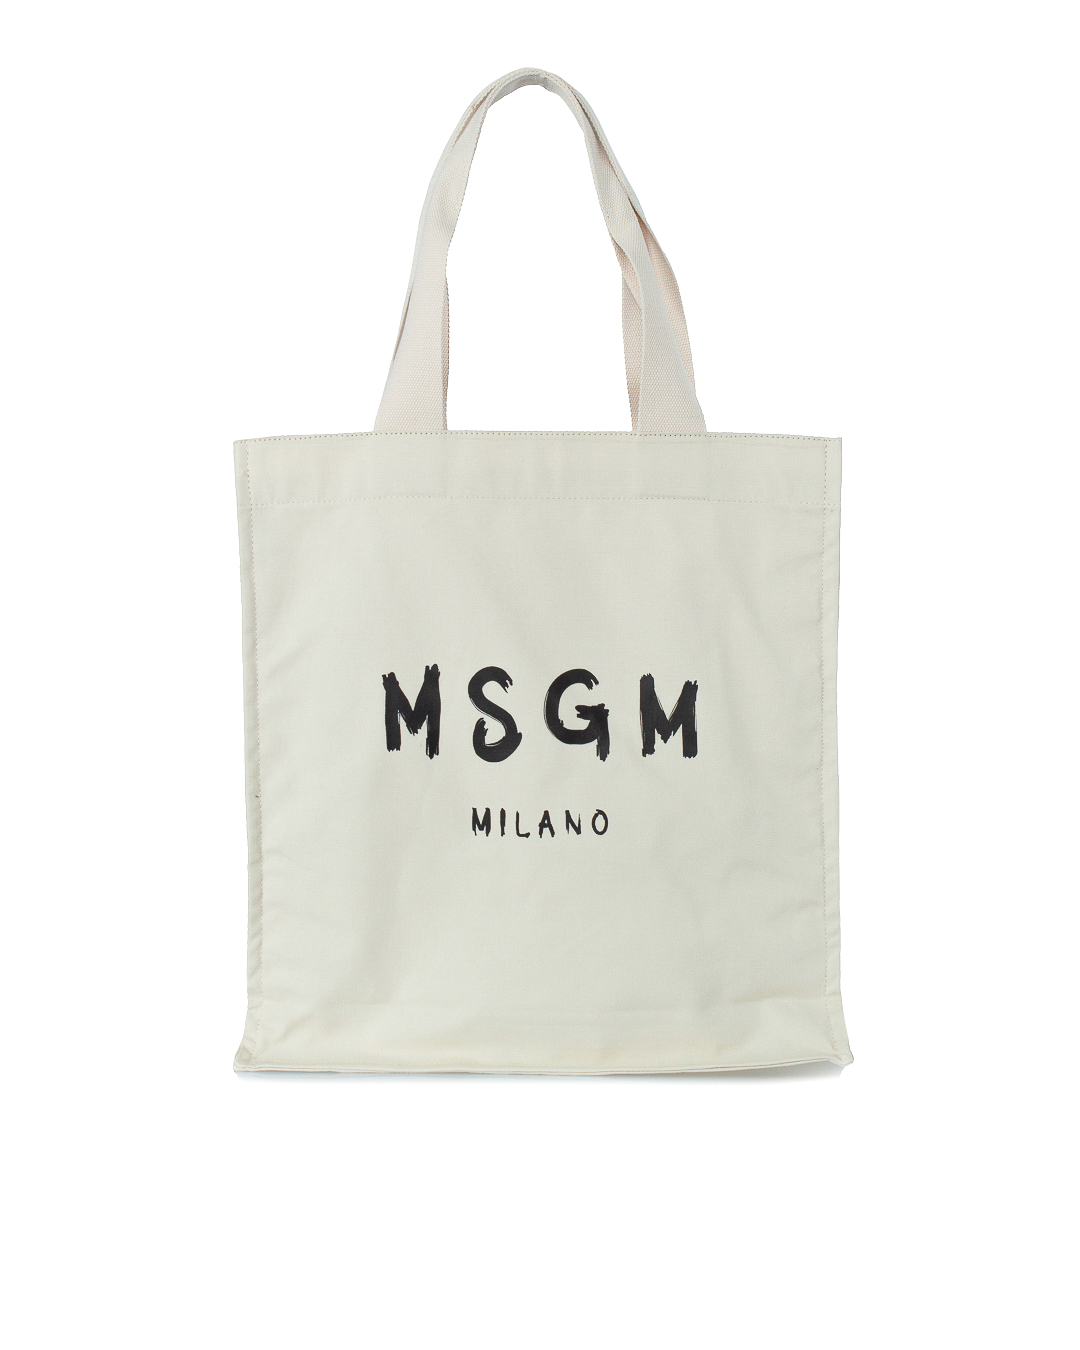 MSGM из текстиля с логотипом бренда  артикул 3240MZ44 марки MSGM купить за 21100 руб.